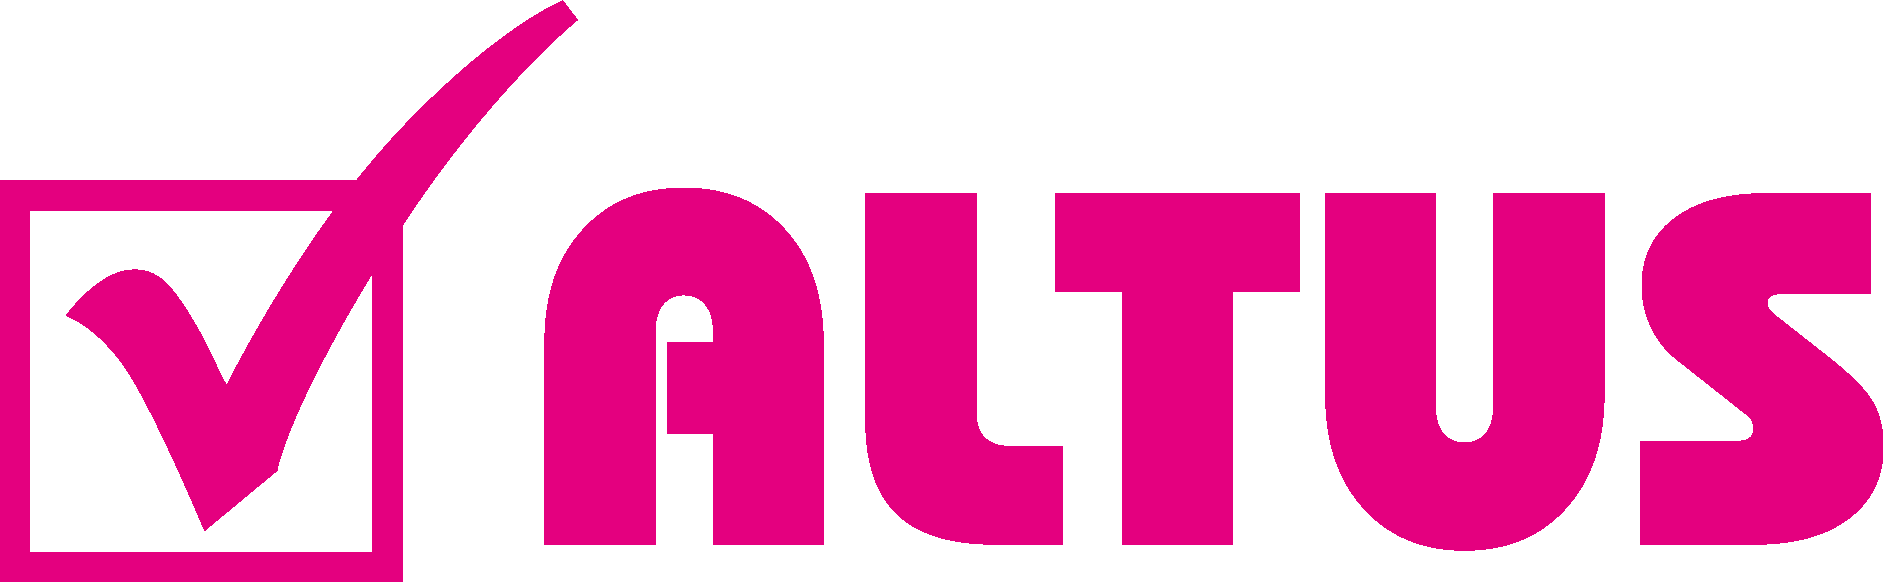 Altus-Logo-Vector.svg-